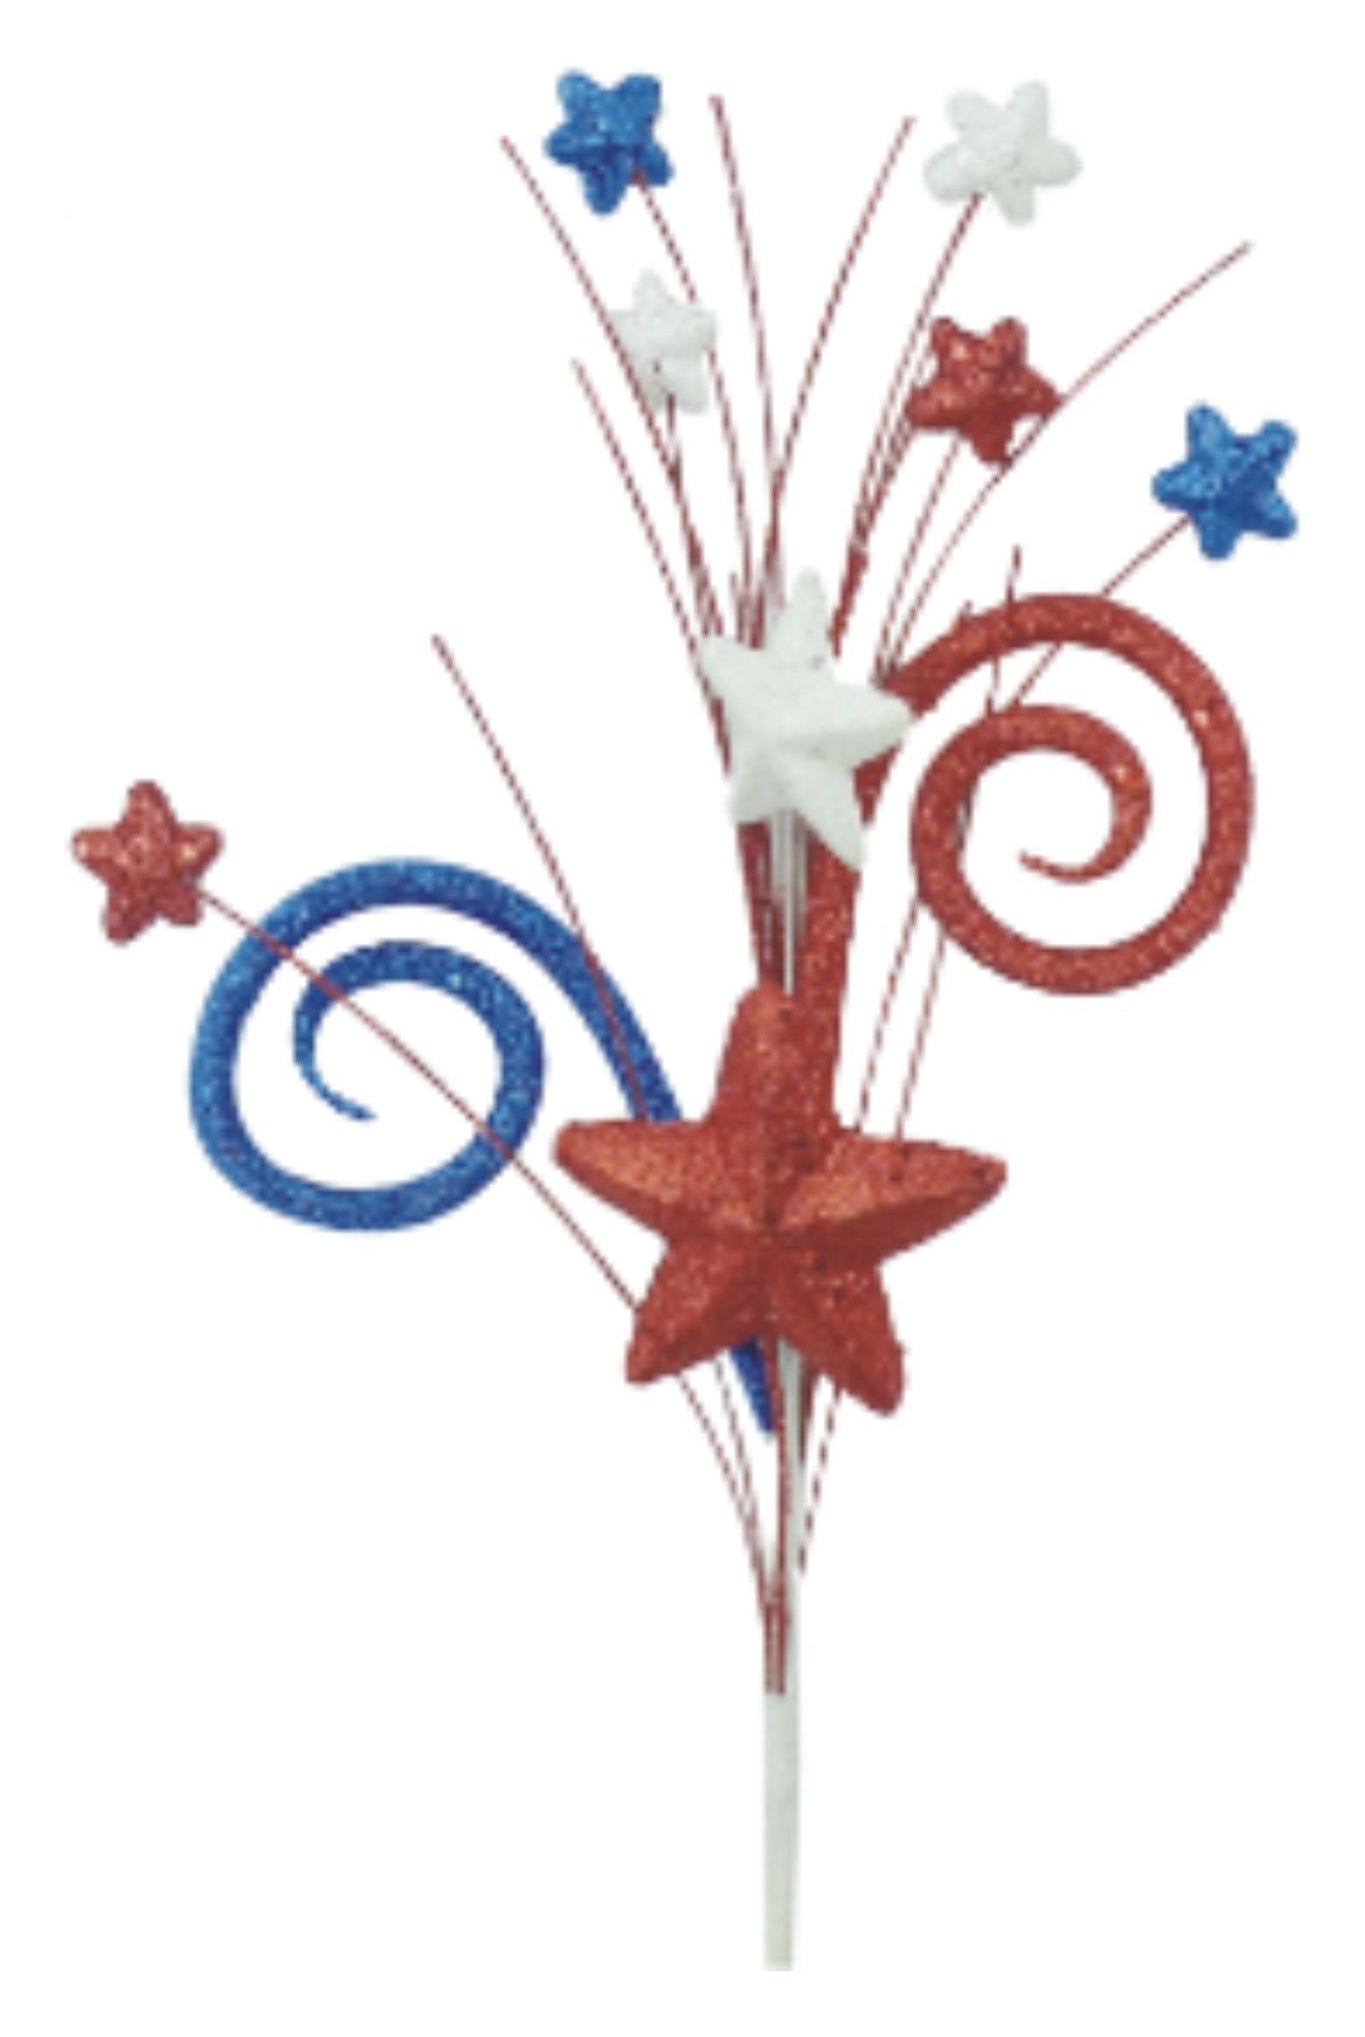 Shop For 18" Glitter Spiral Star Pick: Red, White and Blue 74087RWB